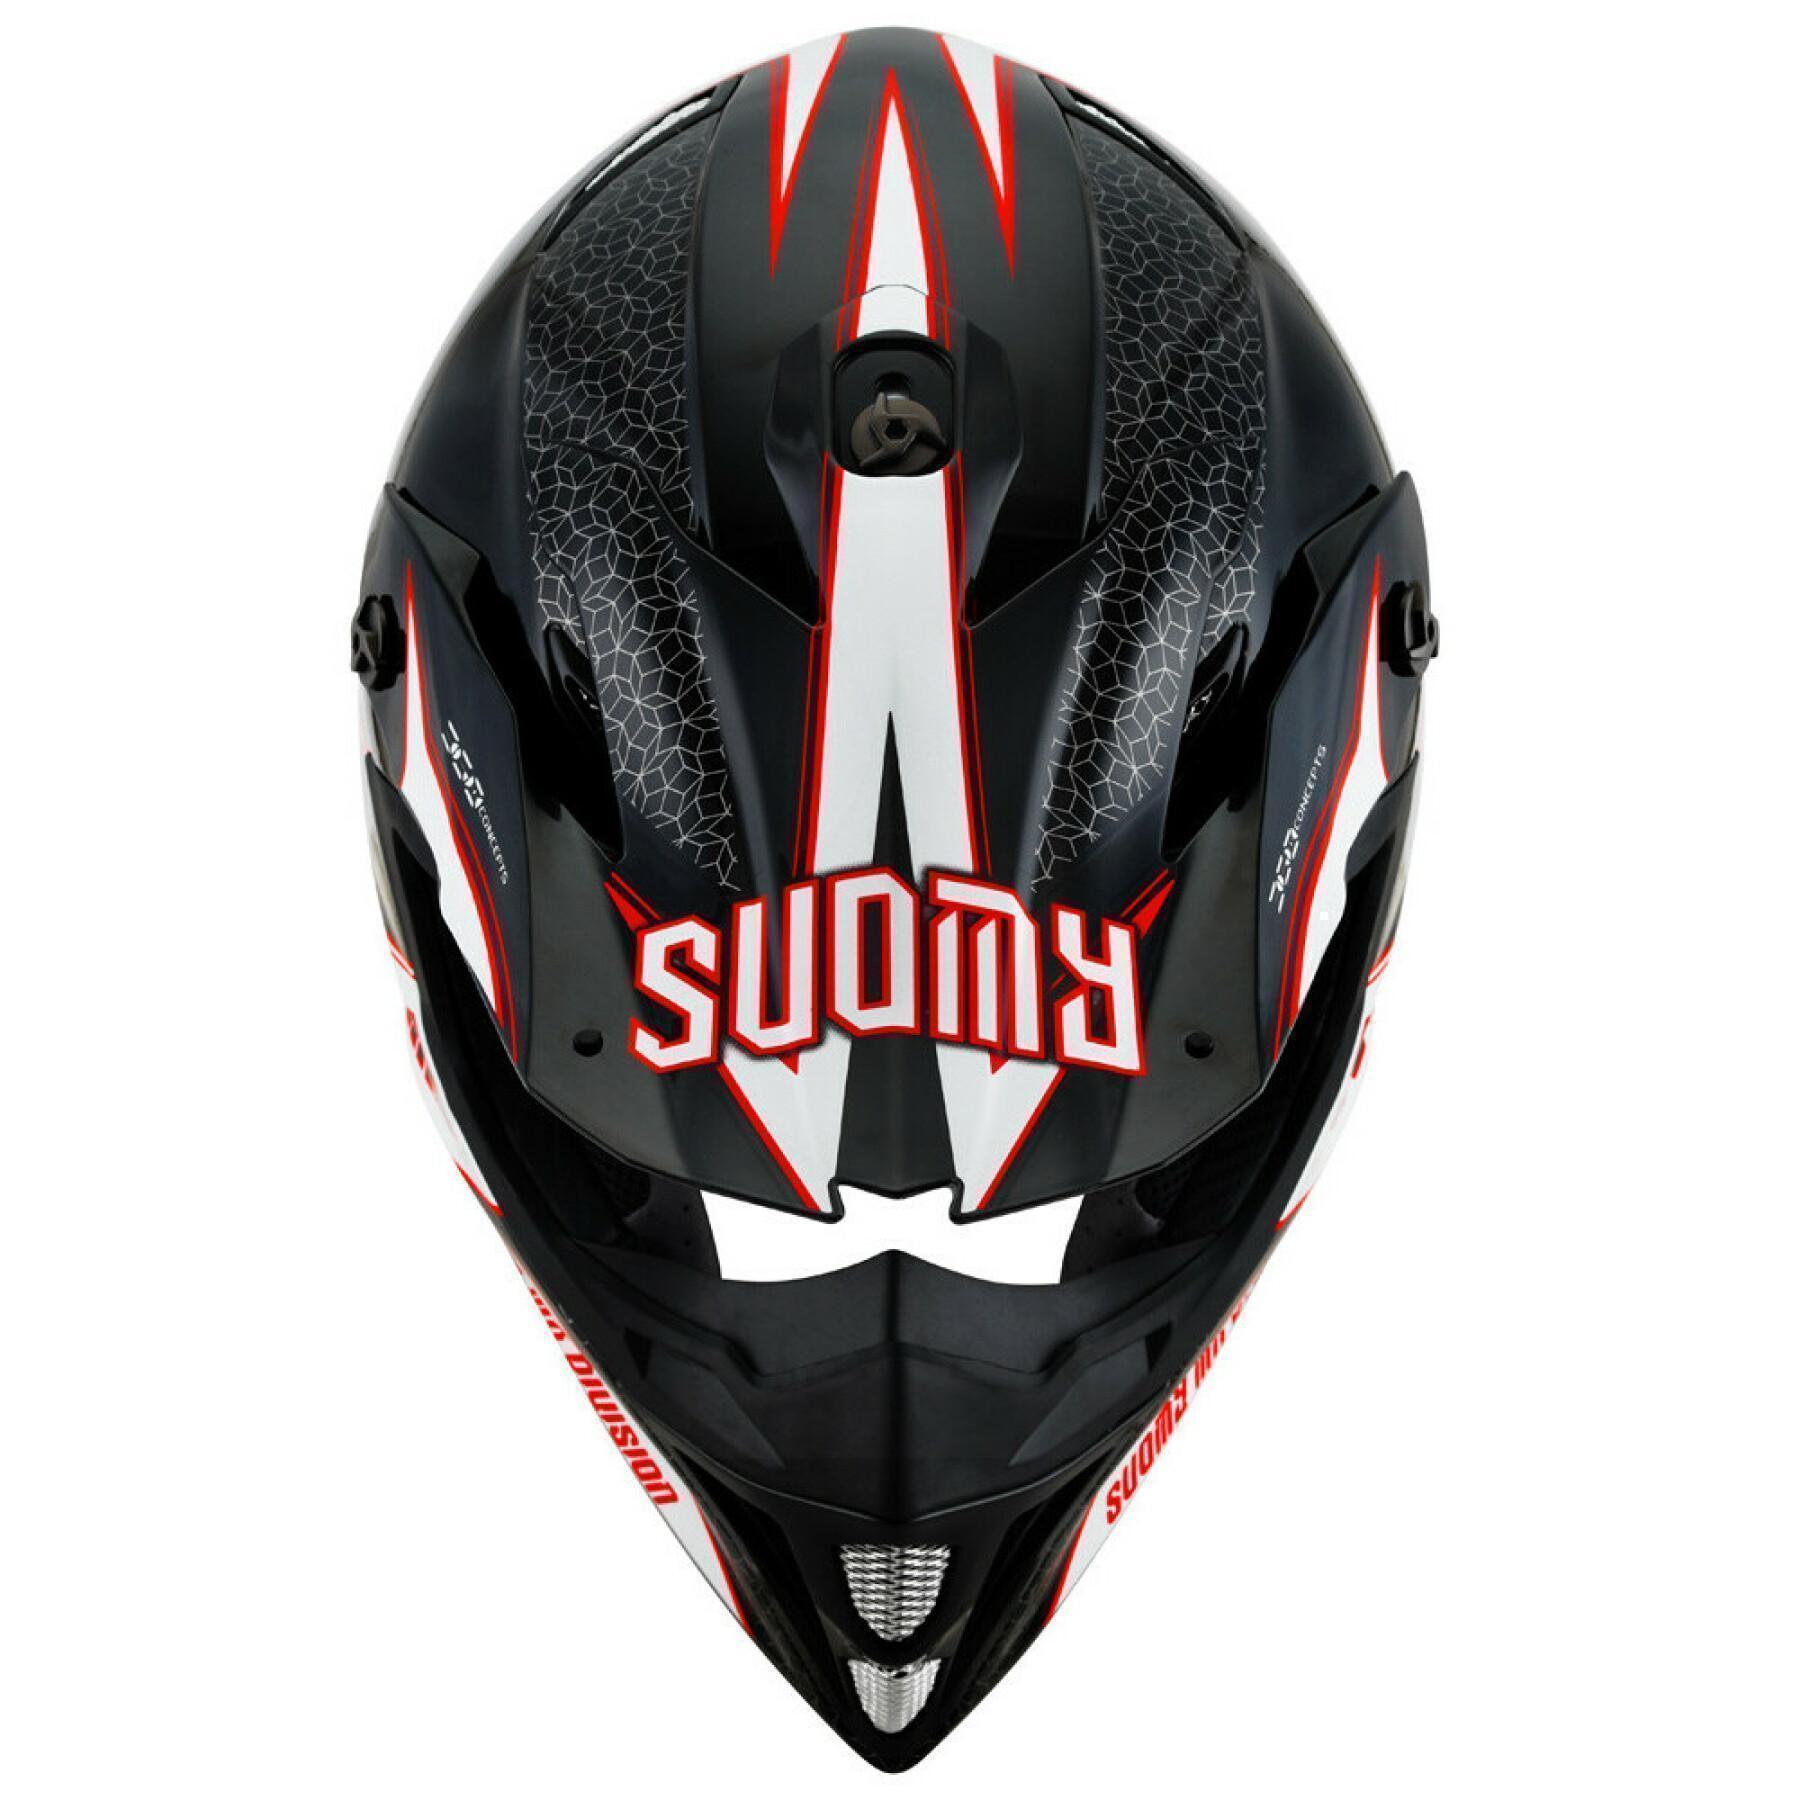 Cross helmet Suomy mx speed pro transition